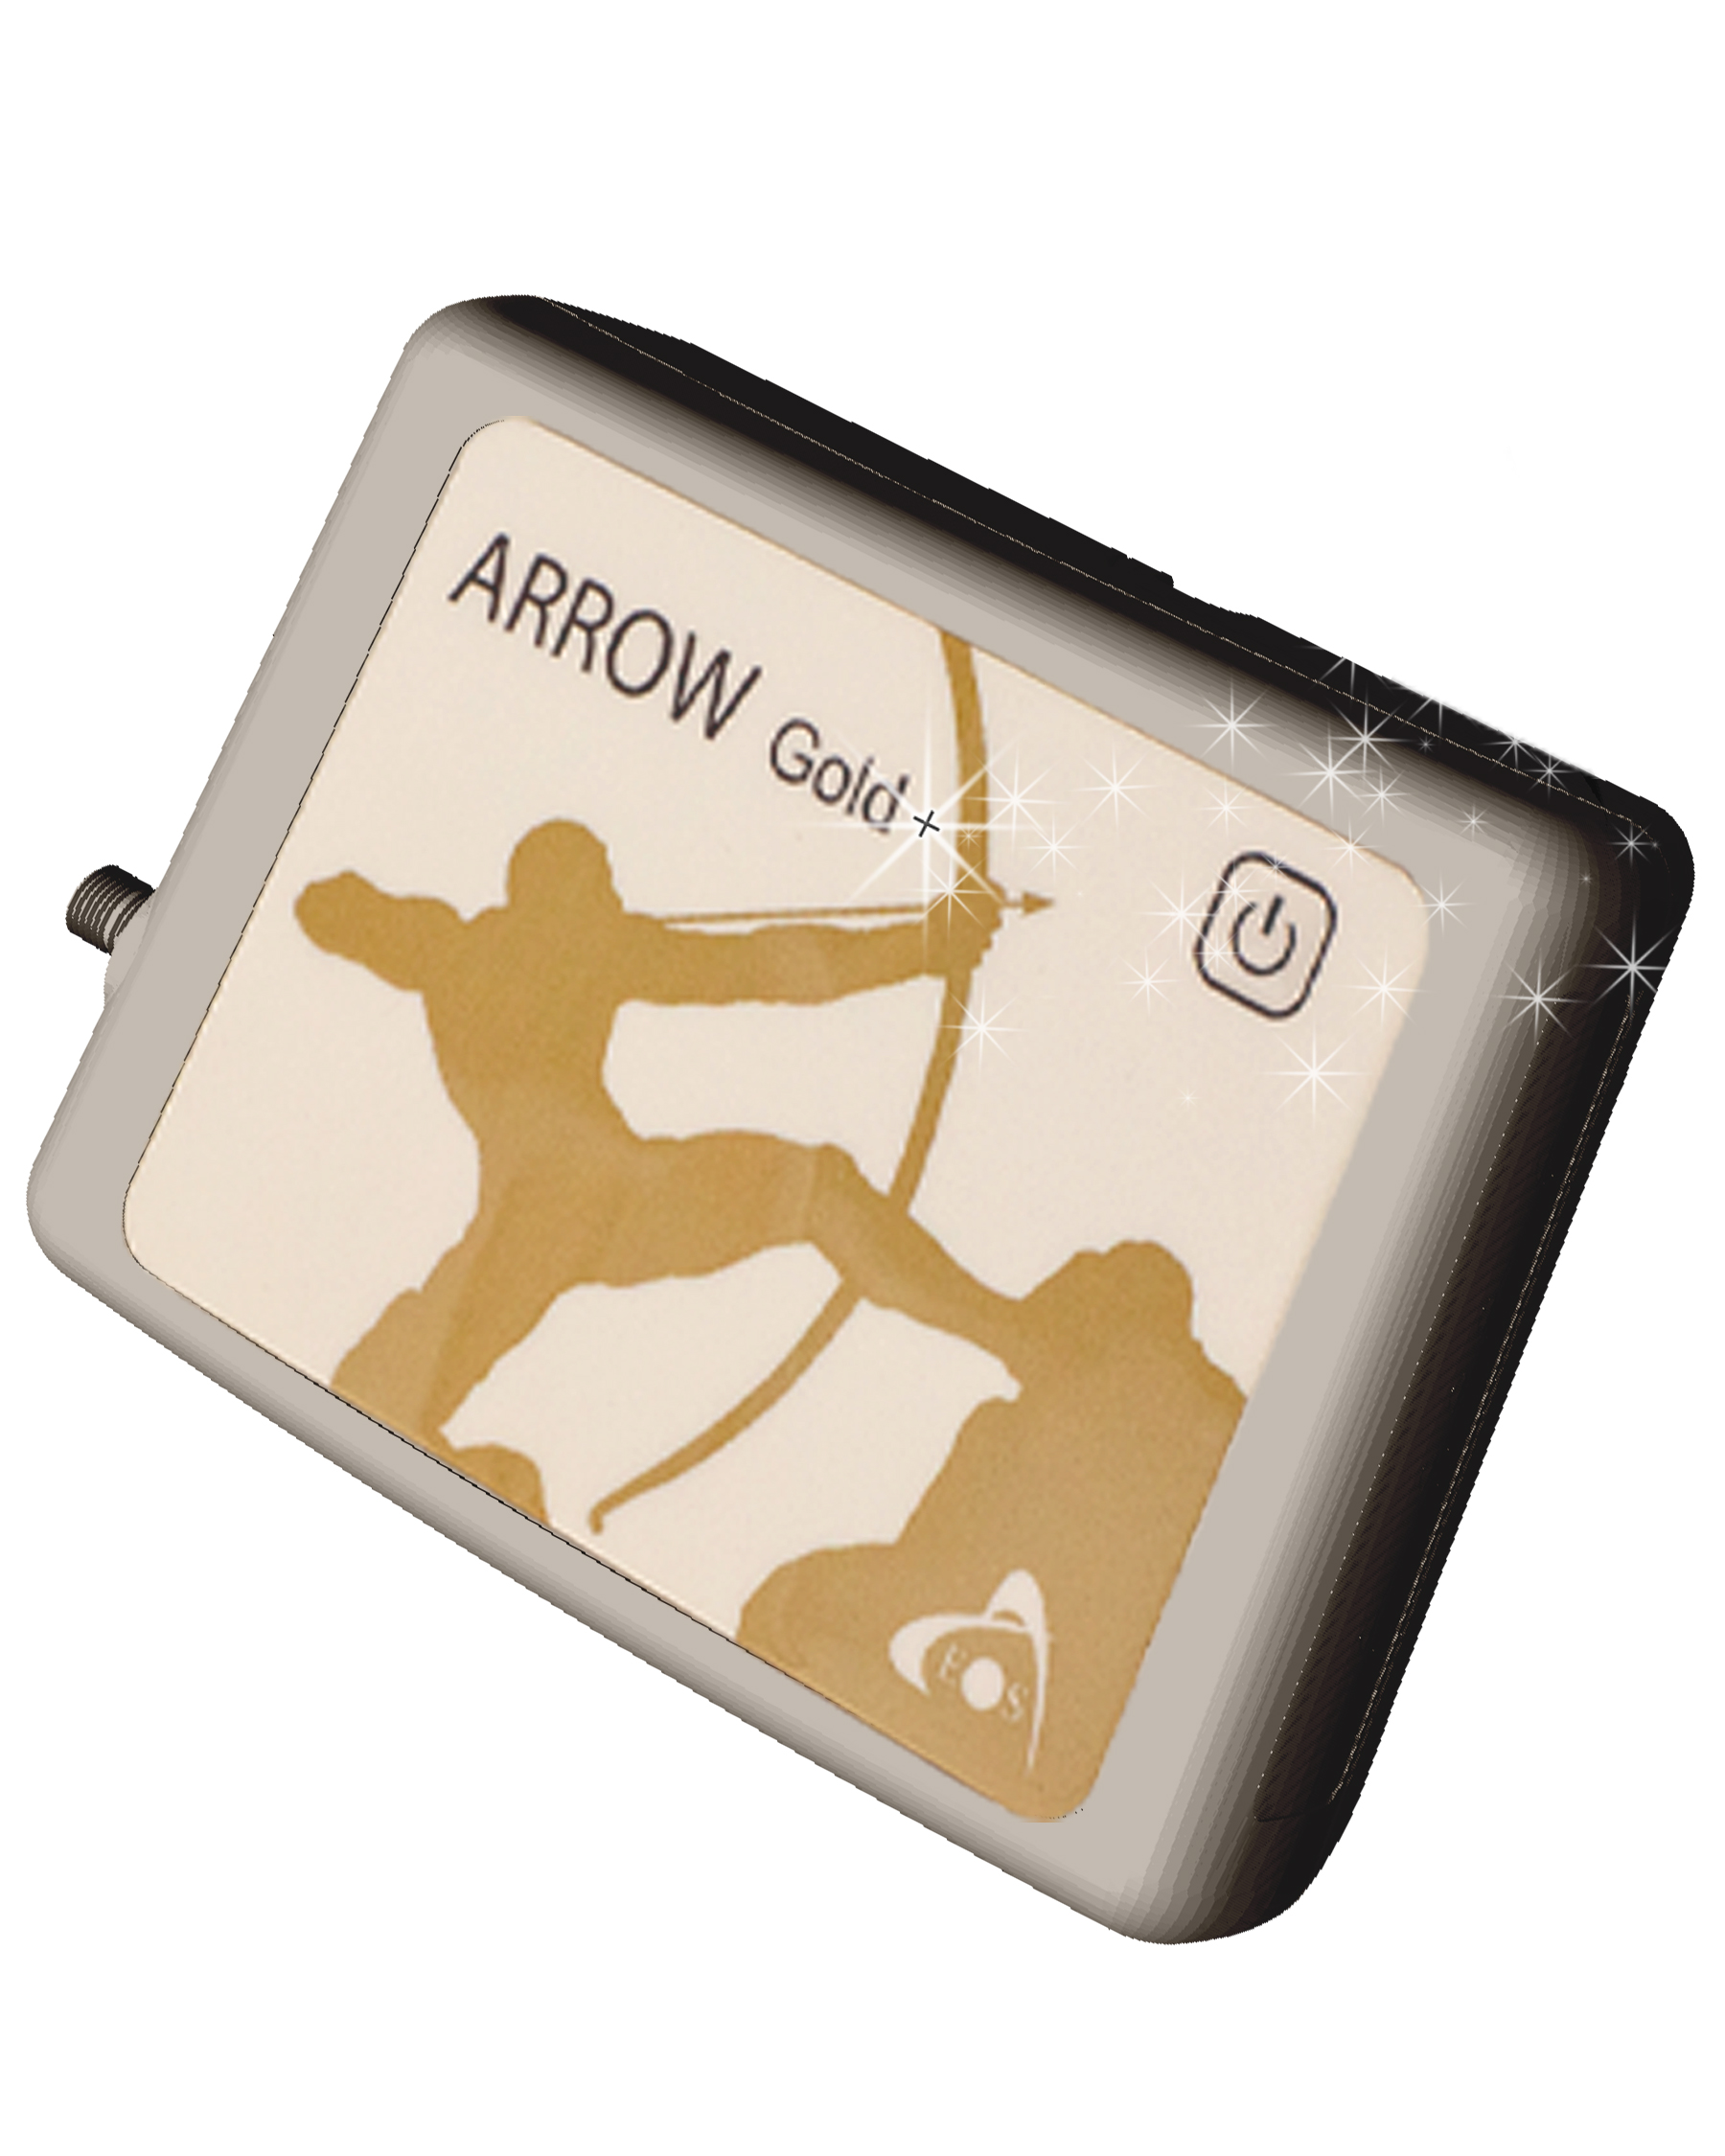 Arrow Gold Plus GNSS GIS GPS Eos Receiver